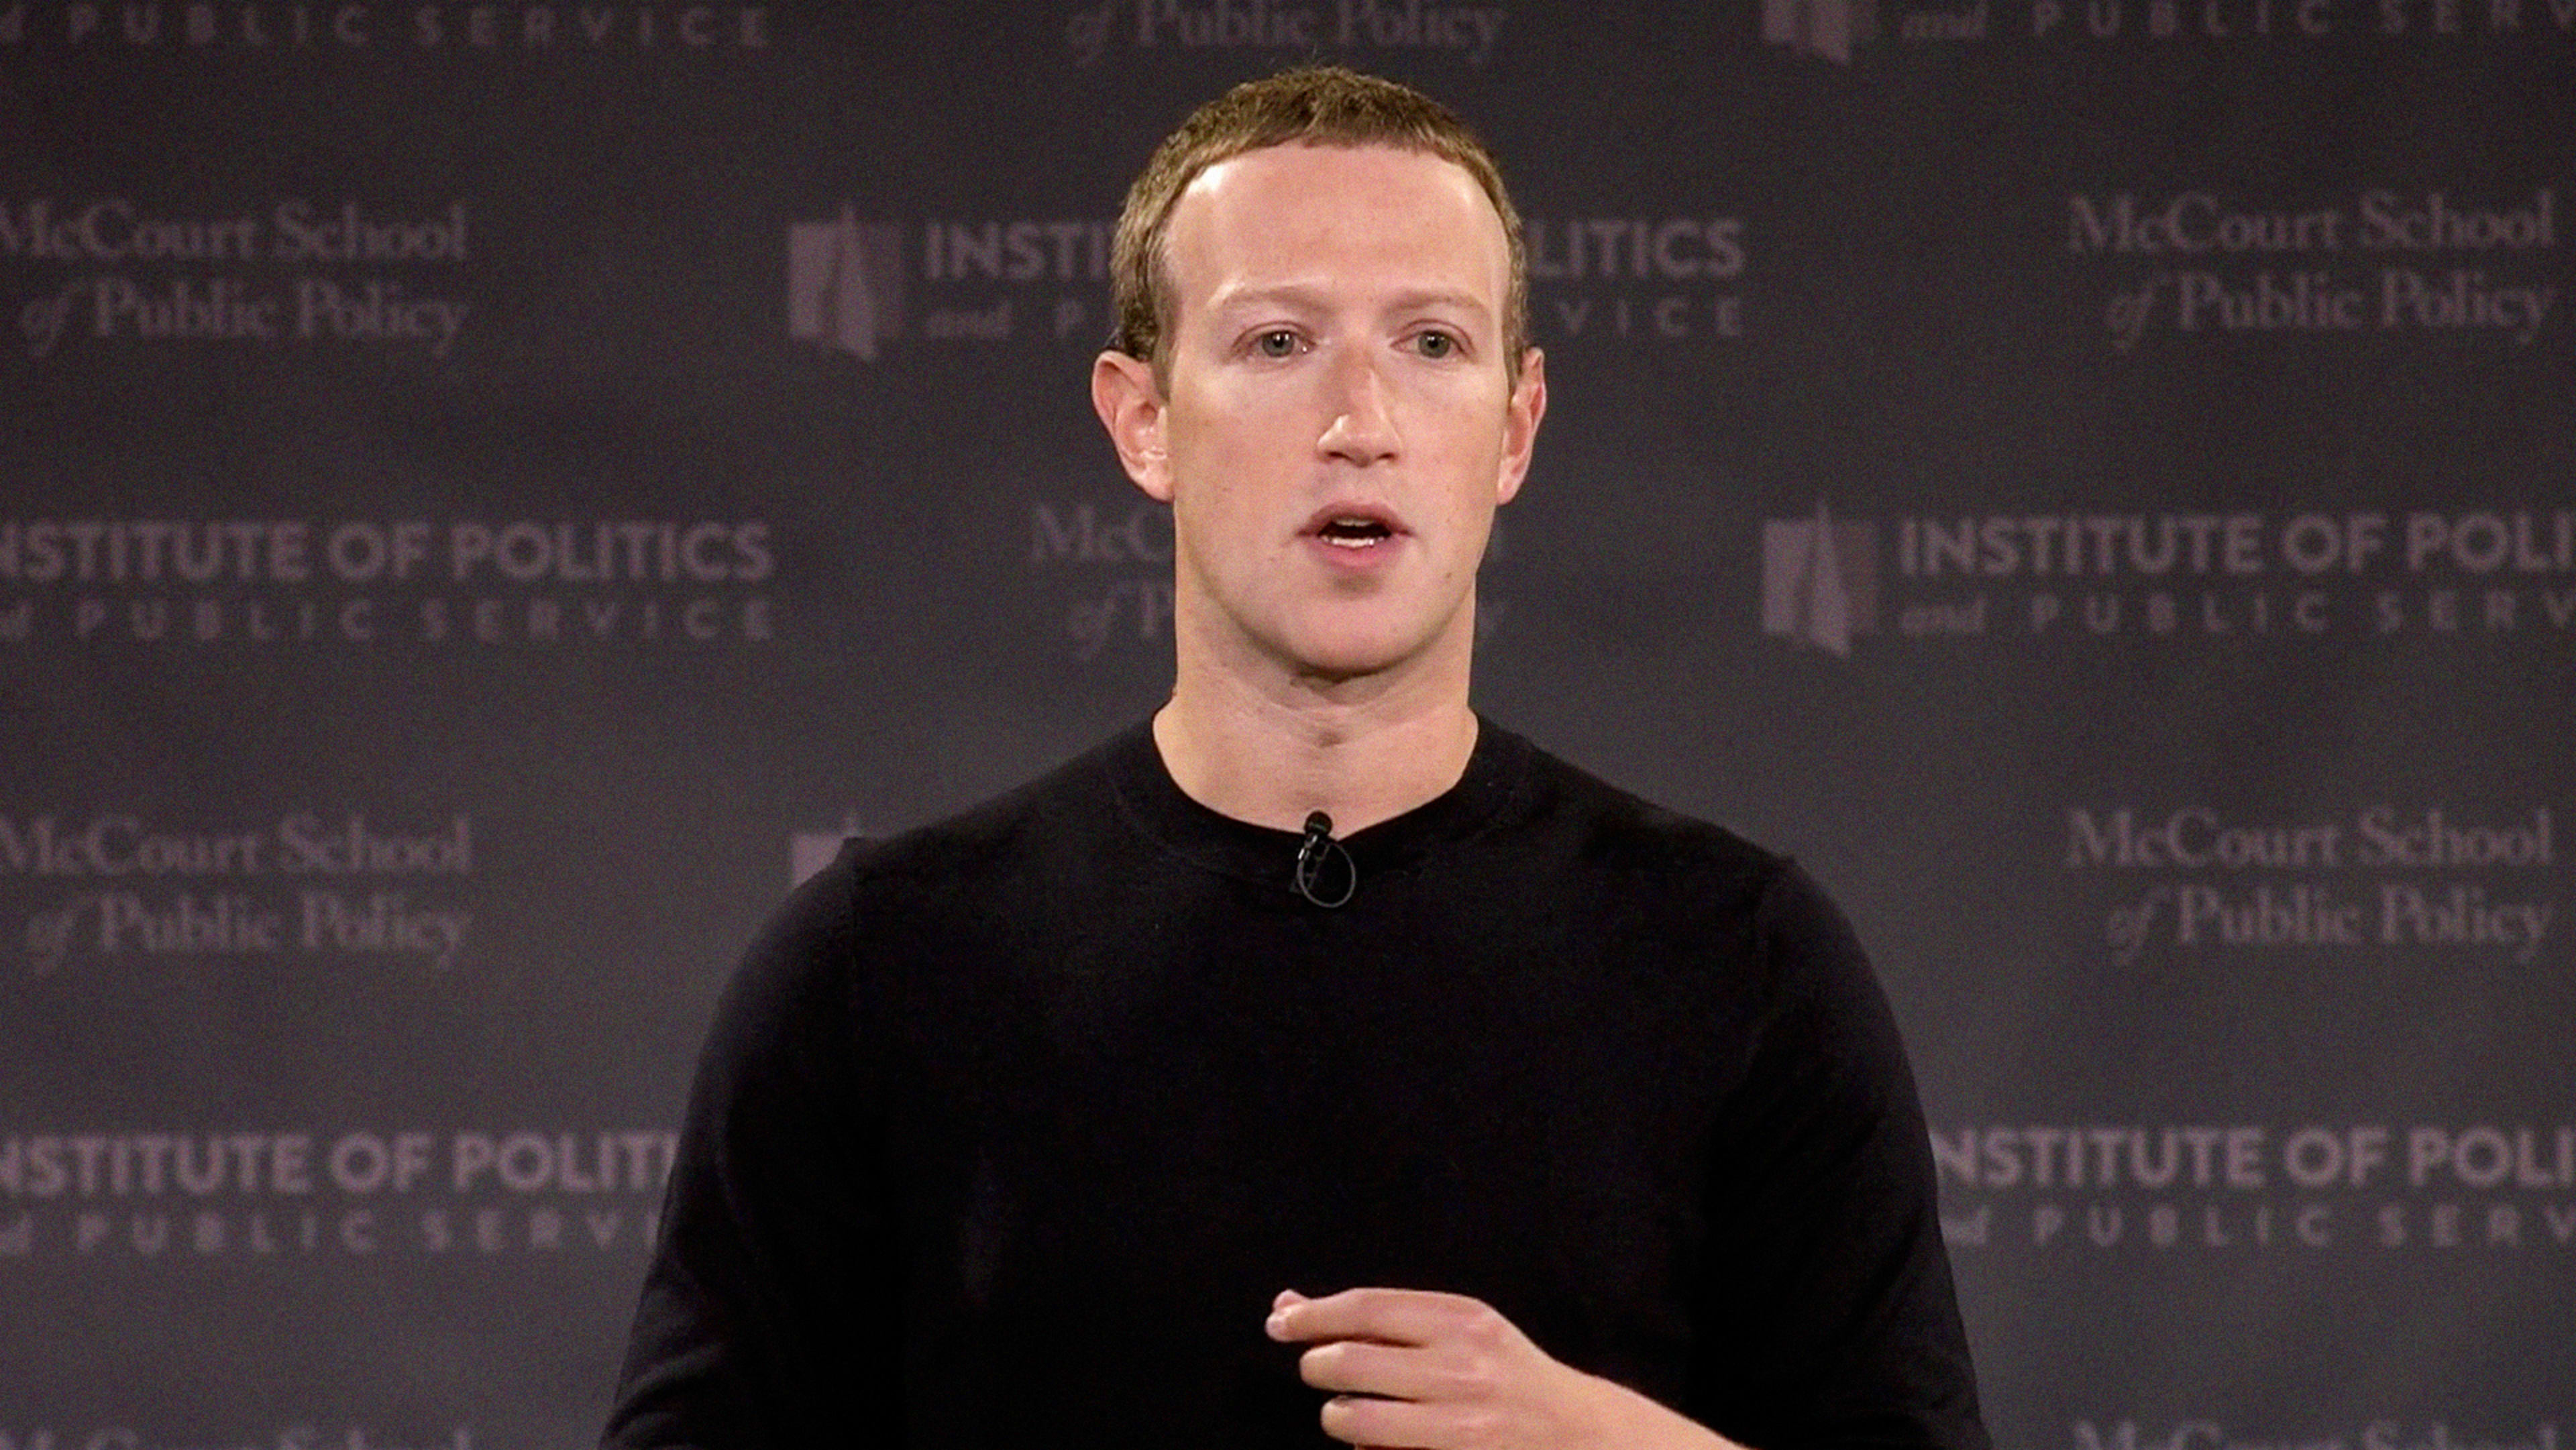 The comments on Mark Zuckerberg’s free-speech address sure look censored